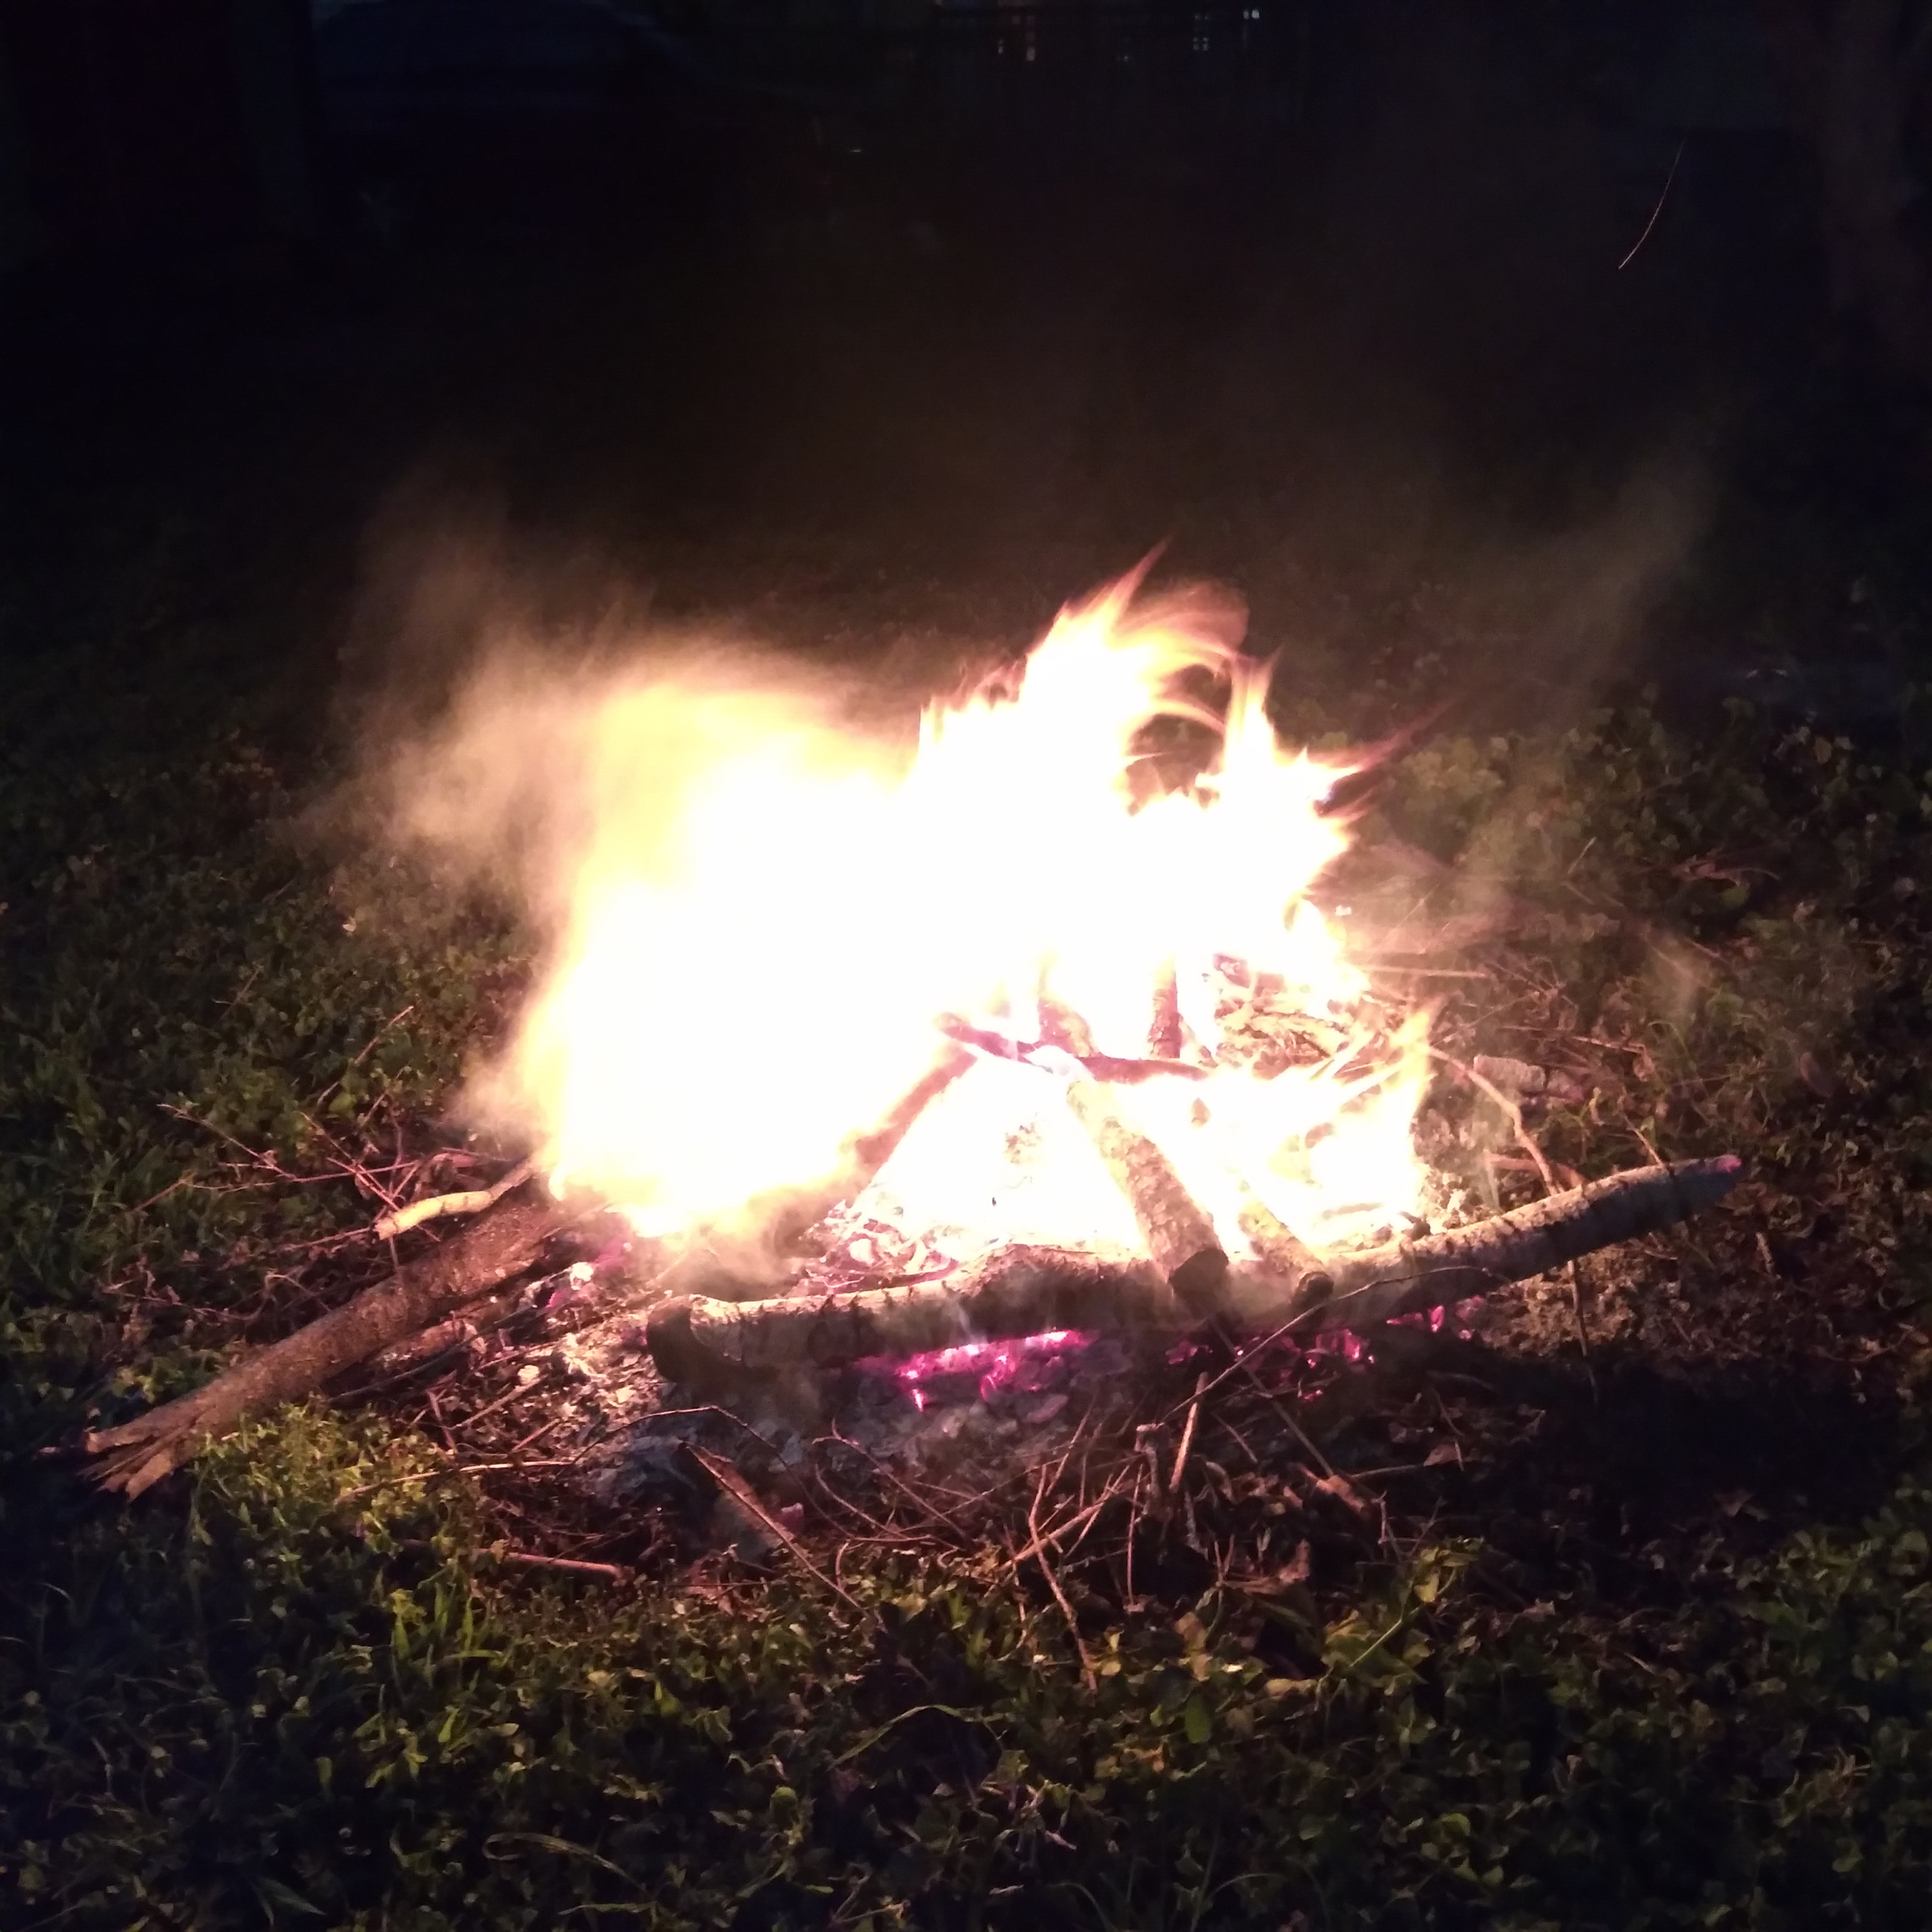 a bonfire at 315 Tricou Street, New Orleans, April 7, 2021.